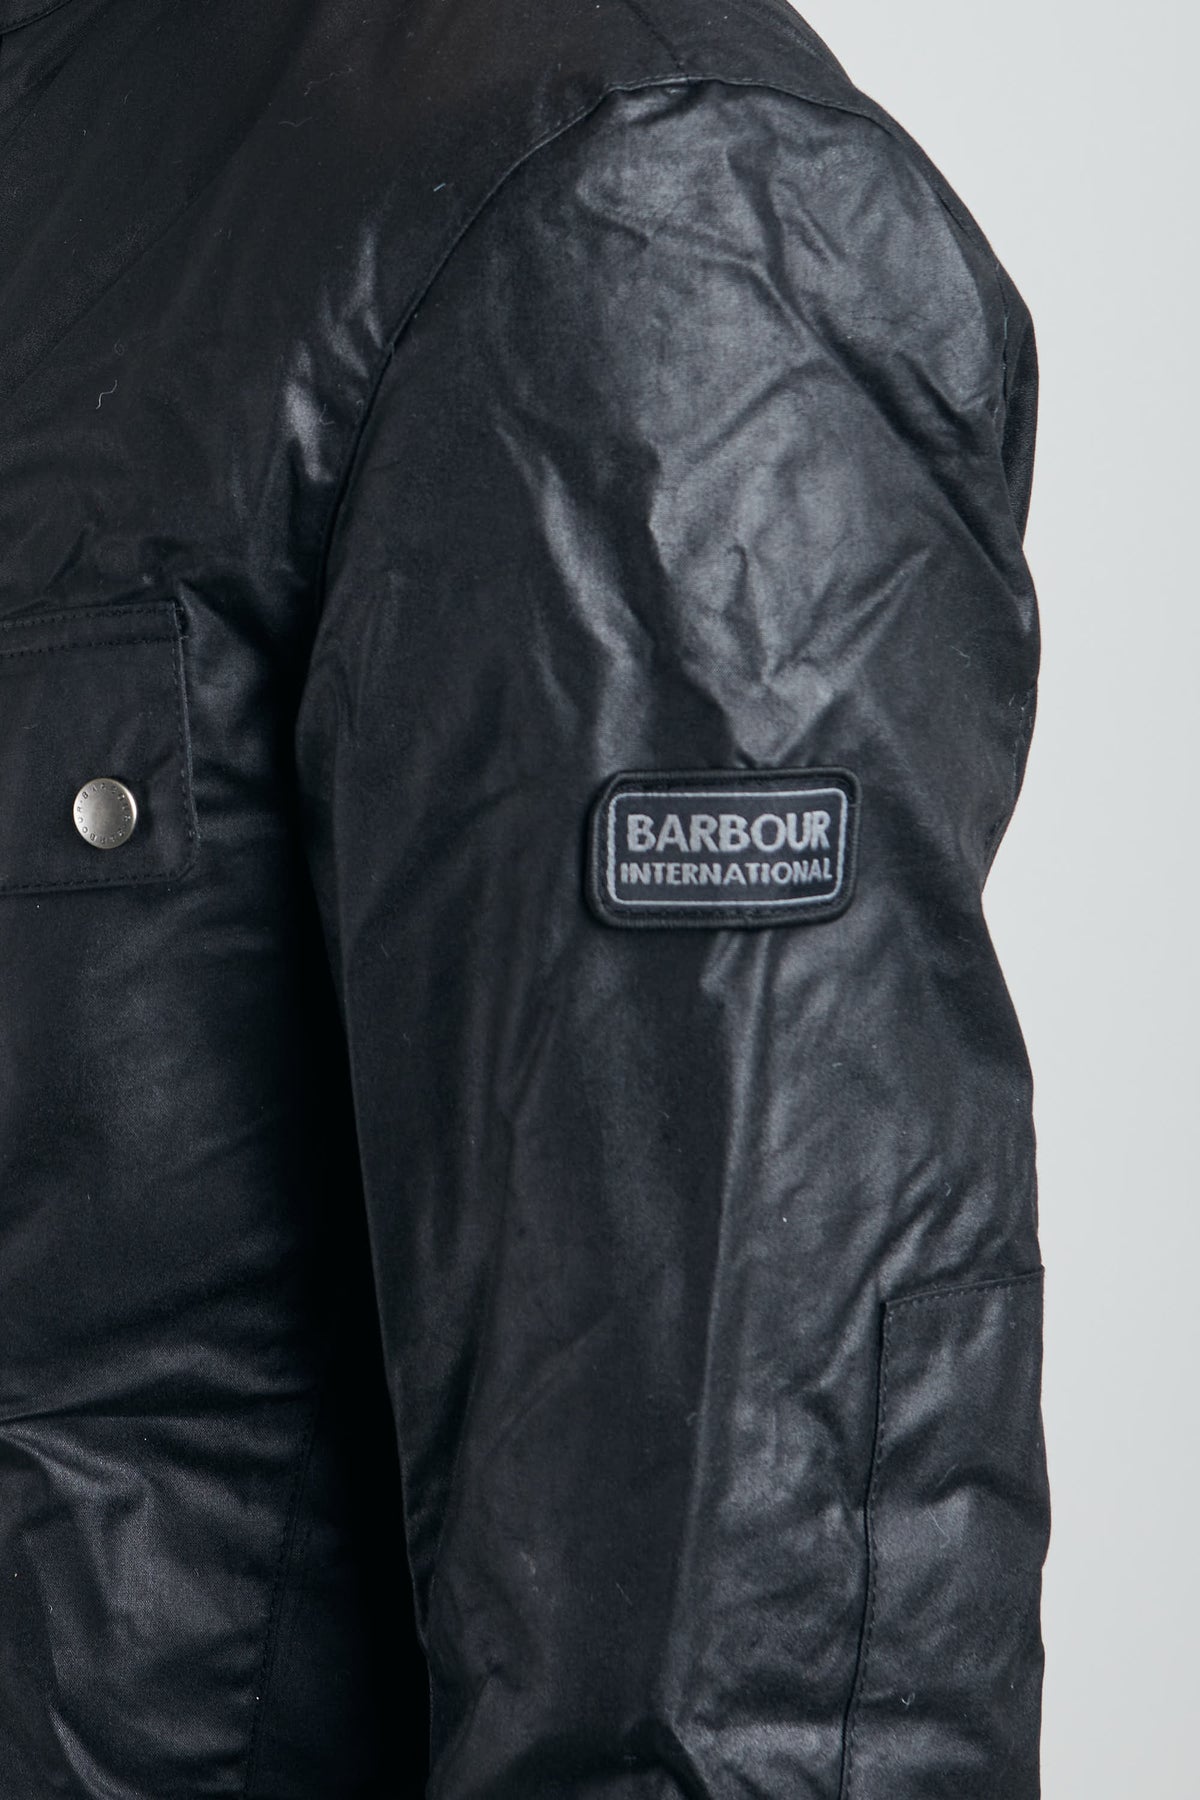 Barbour International Duke Jacket Interno Trapuntato Nero Uomo - 7